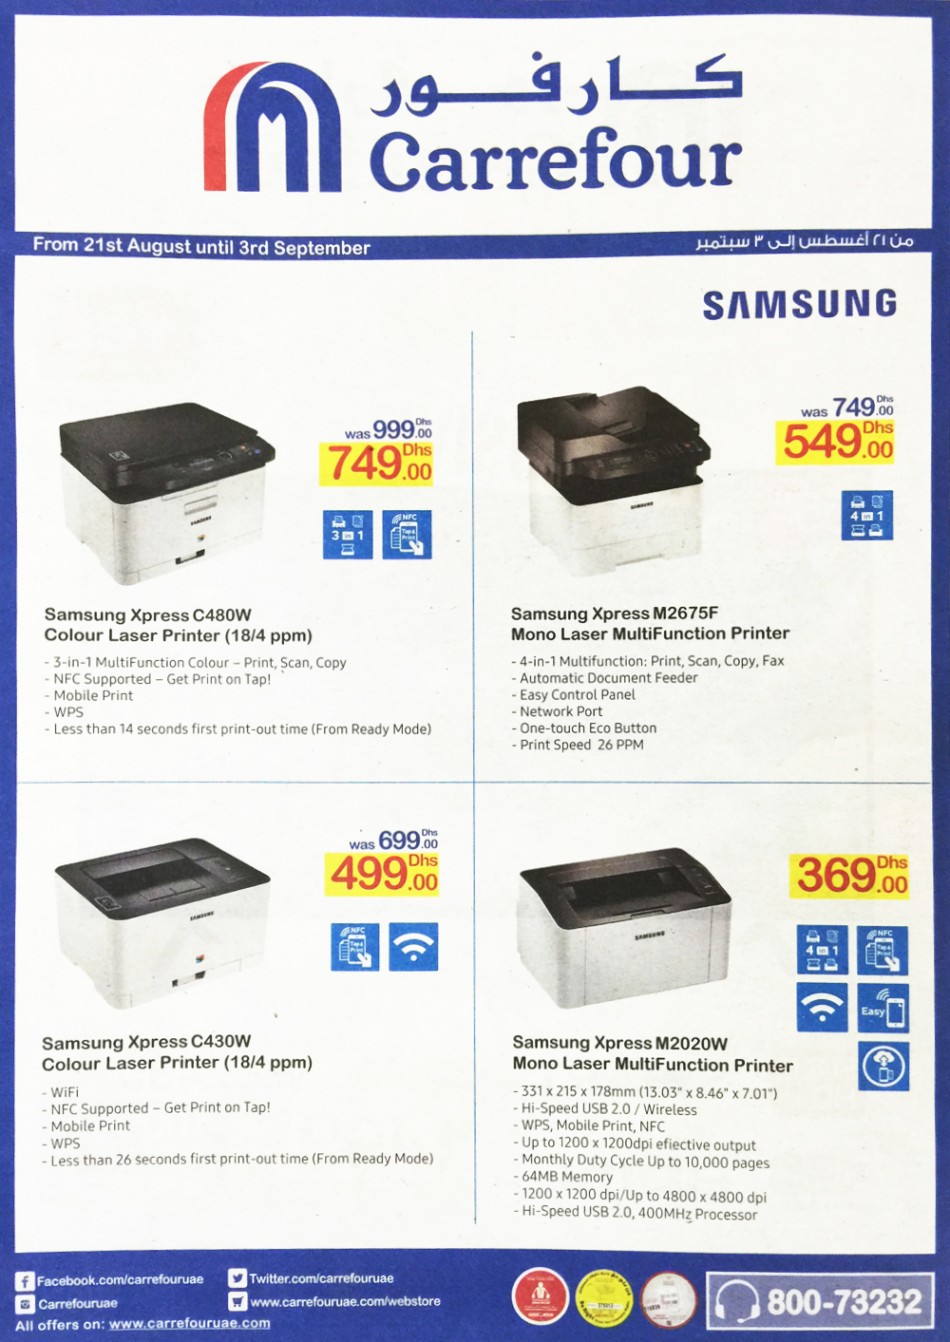 Samsung Printer Deals